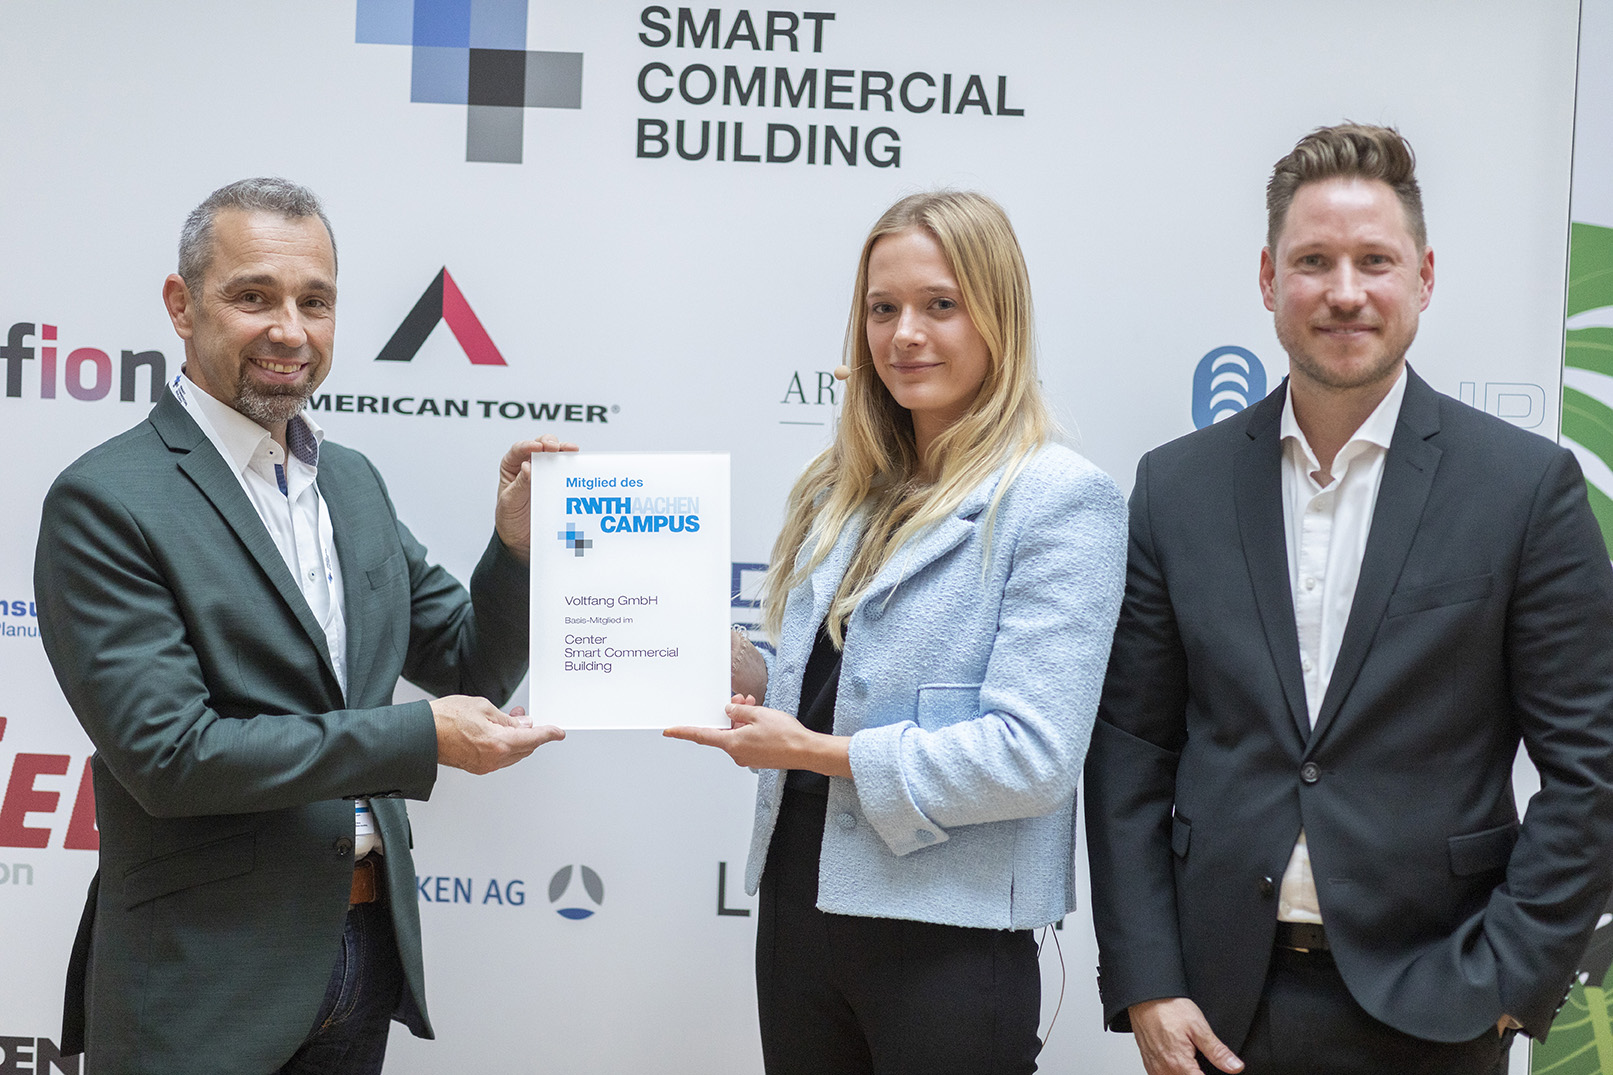 aMIKA1813a Voltfang GmbH gewinnt CSCB PropTech Award und wird Mitglied  